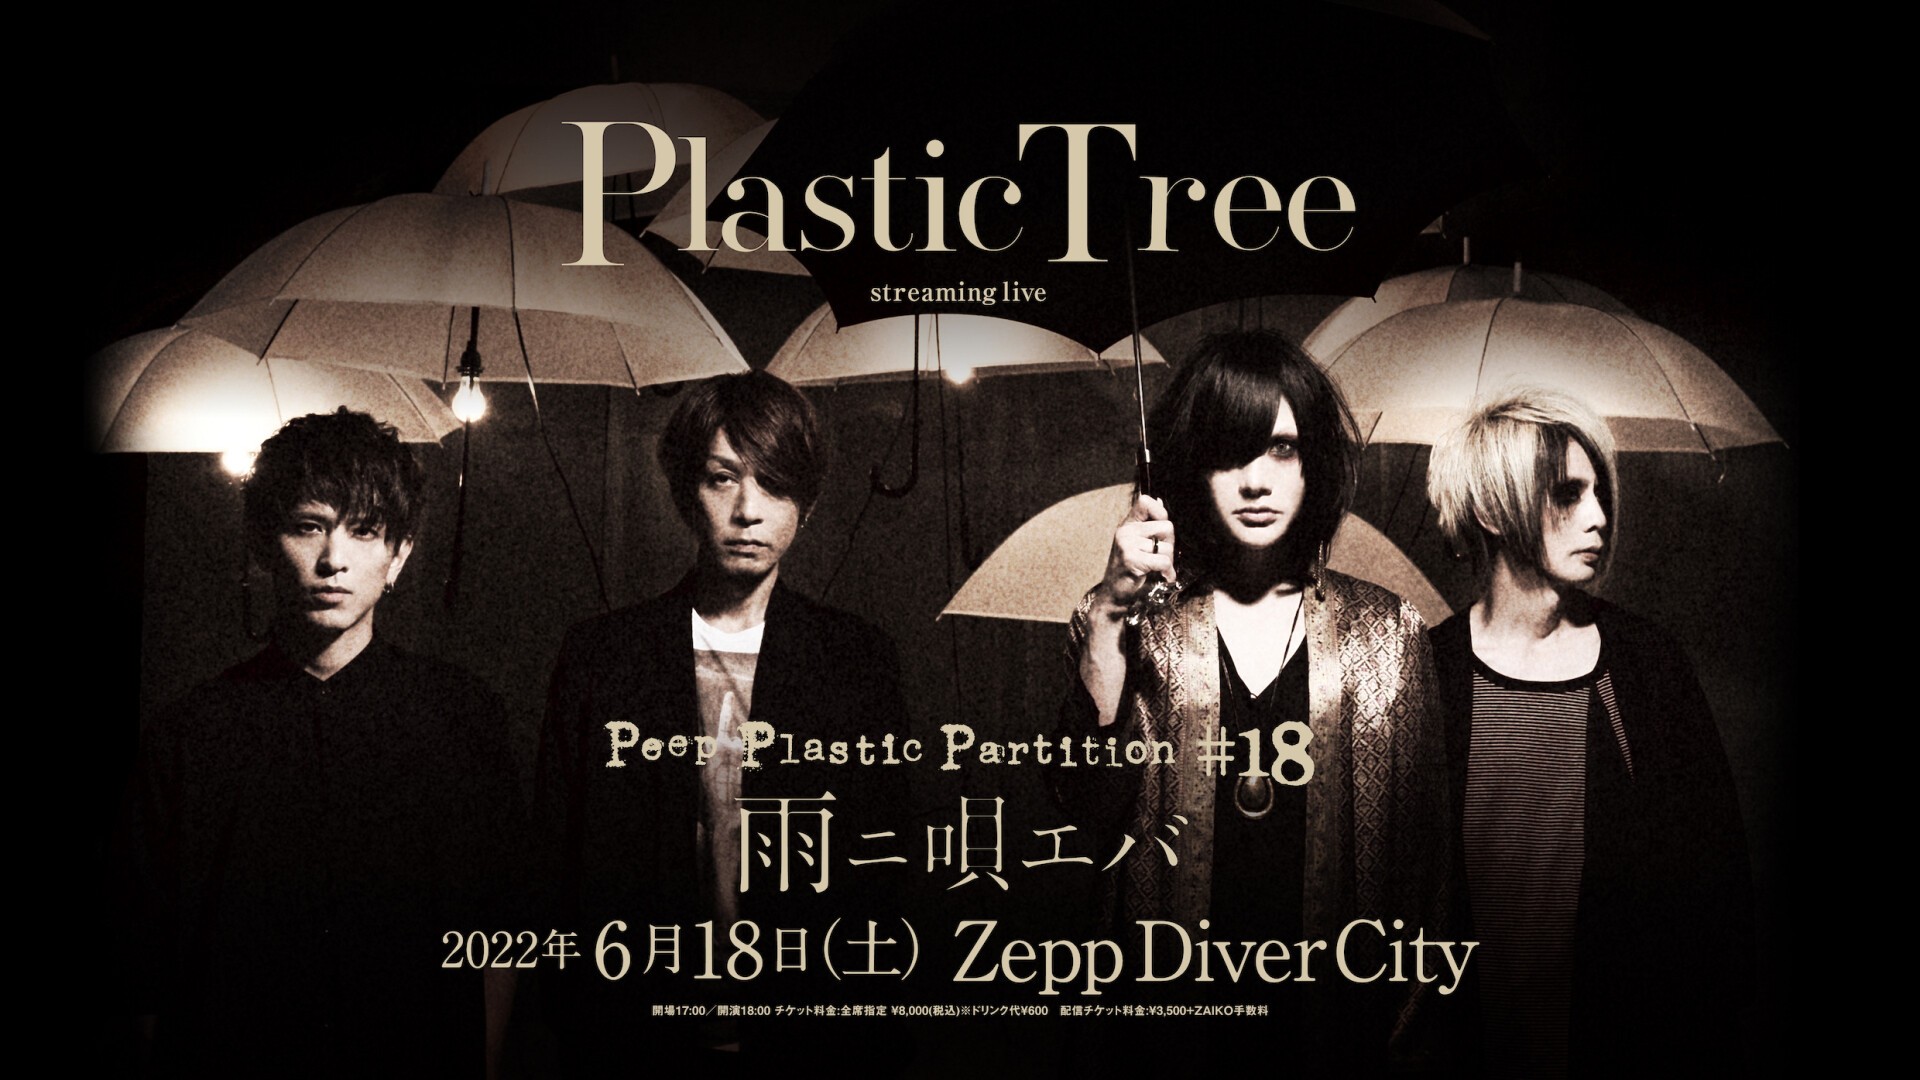 Plastic Tree Peep Plastic Partition BOX - ミュージック